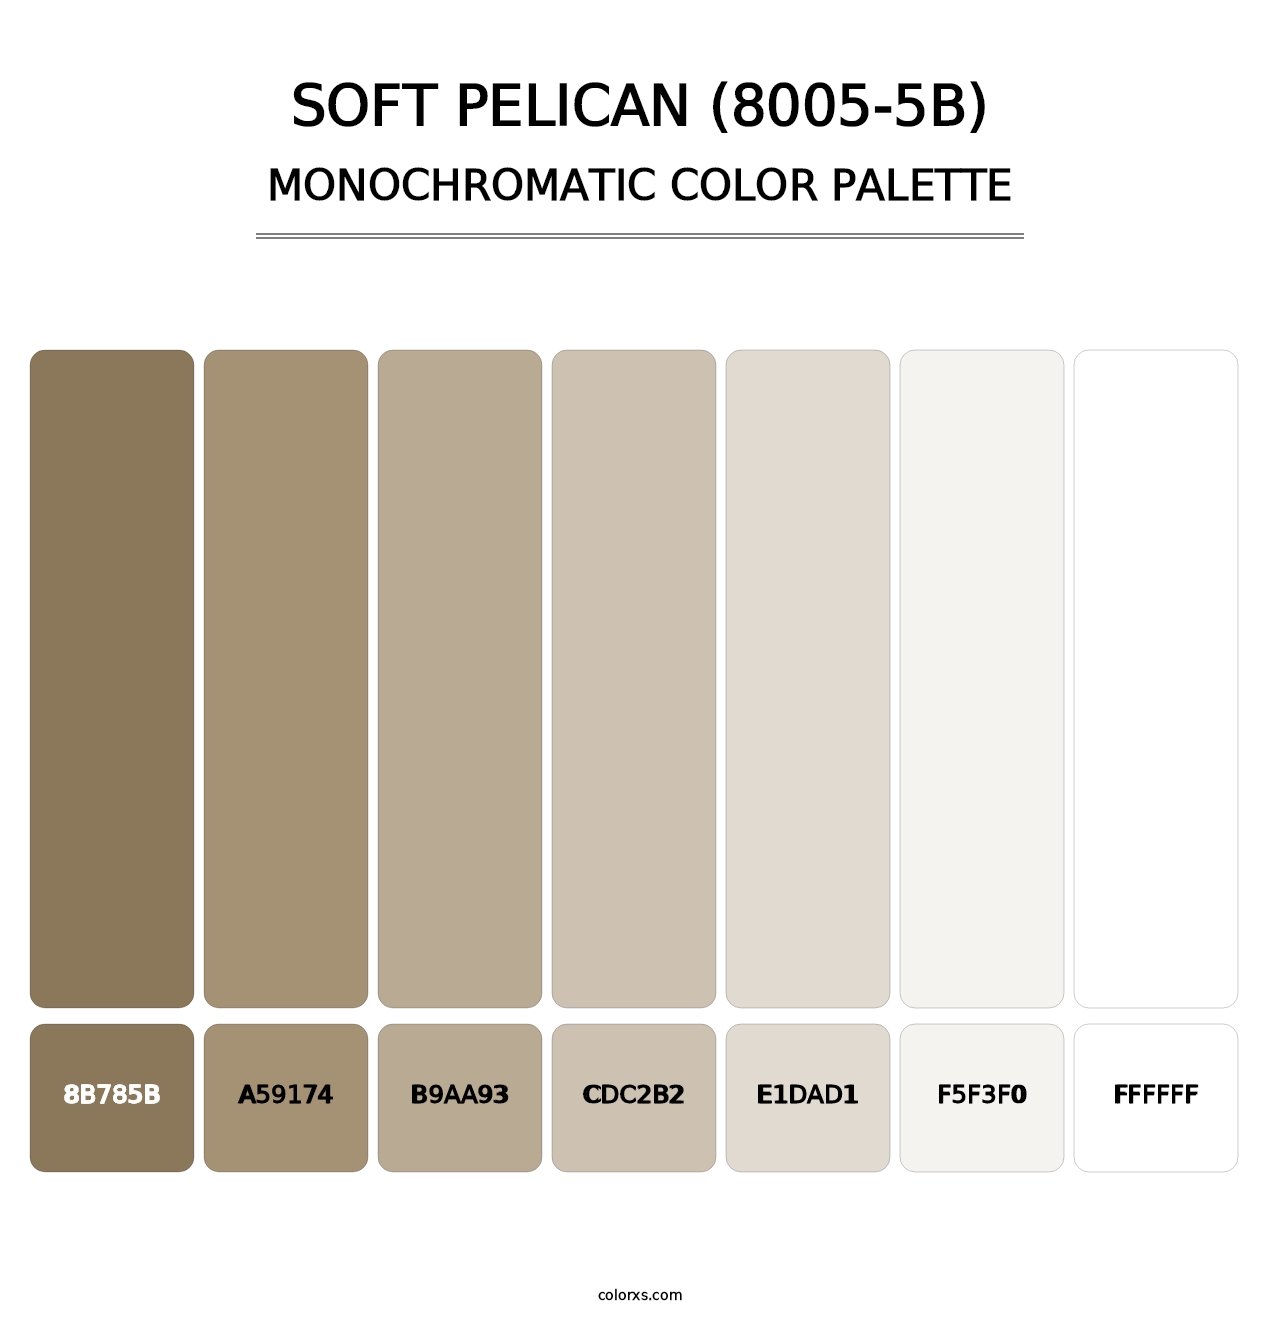 Soft Pelican (8005-5B) - Monochromatic Color Palette